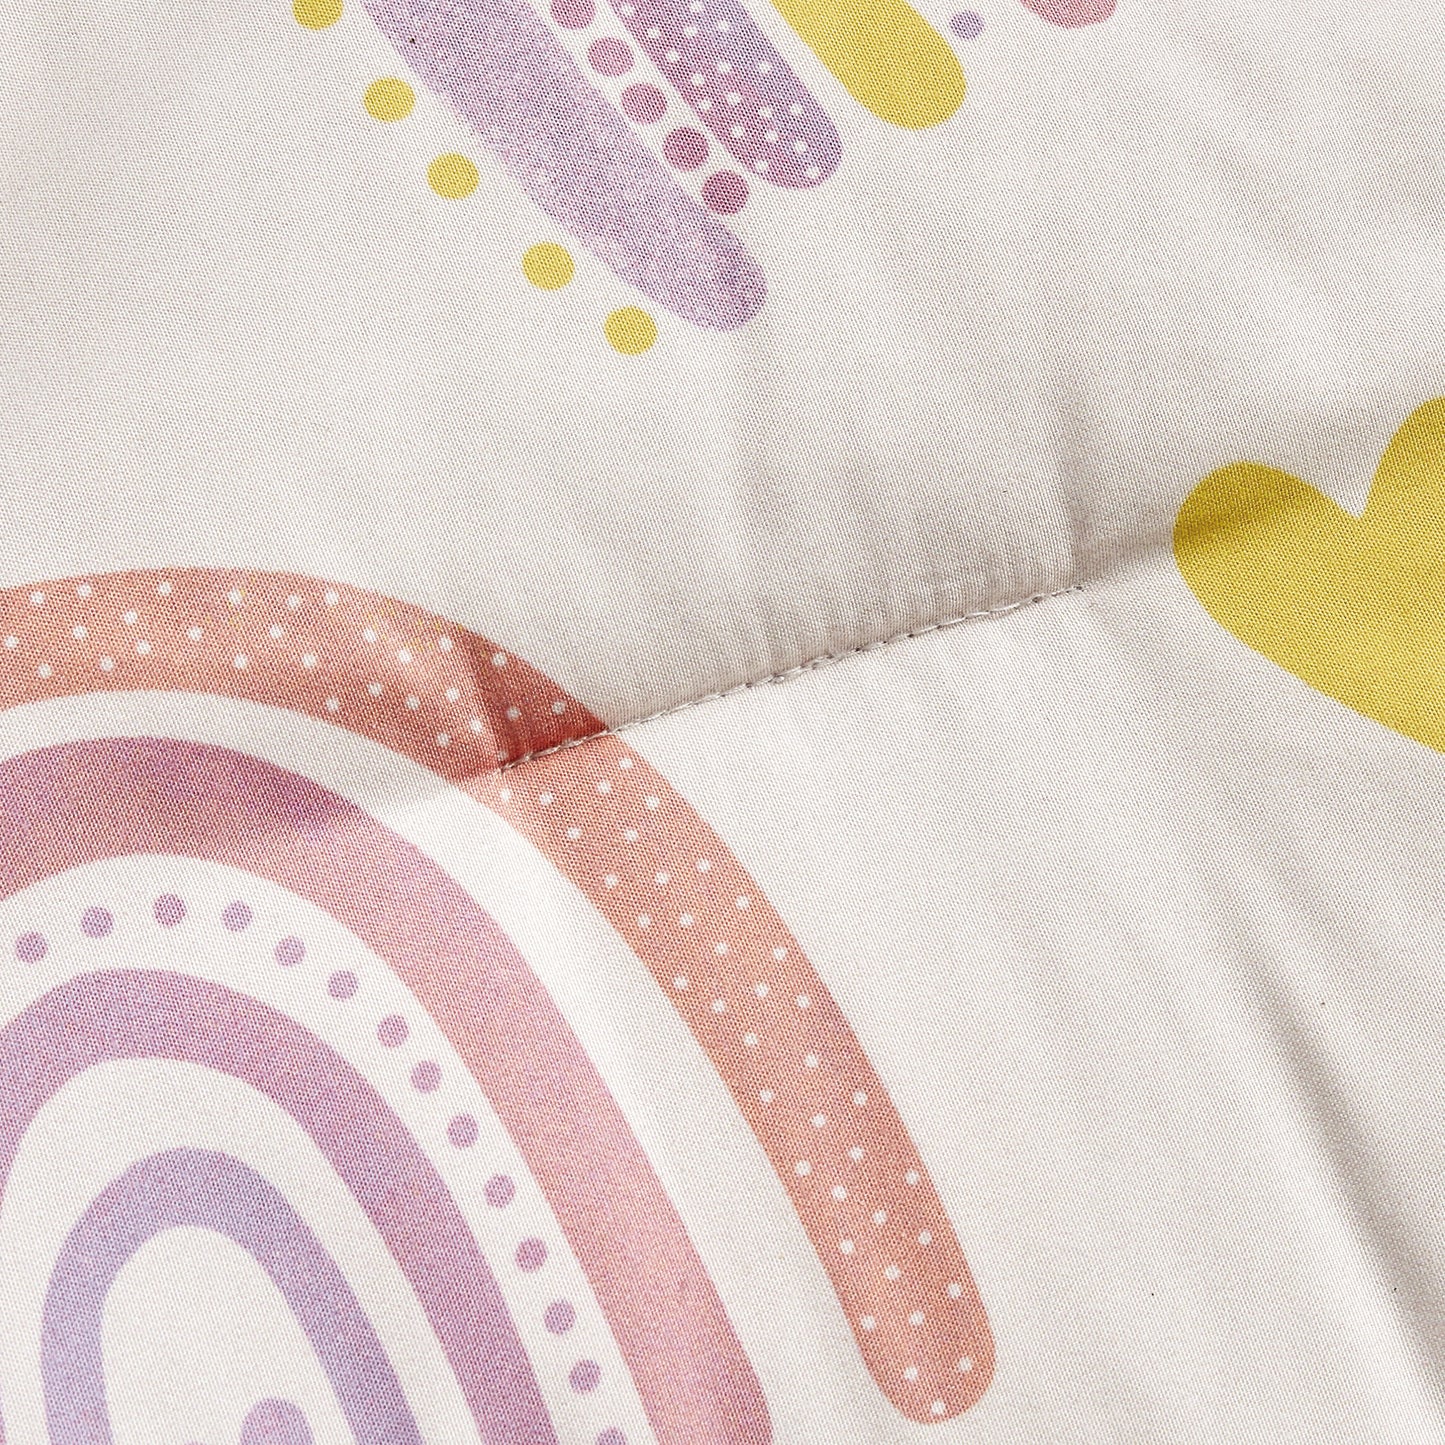 Cute Rainbow Love Hearts Kids Microfiber Printed Comforter Set with Plush Pillow